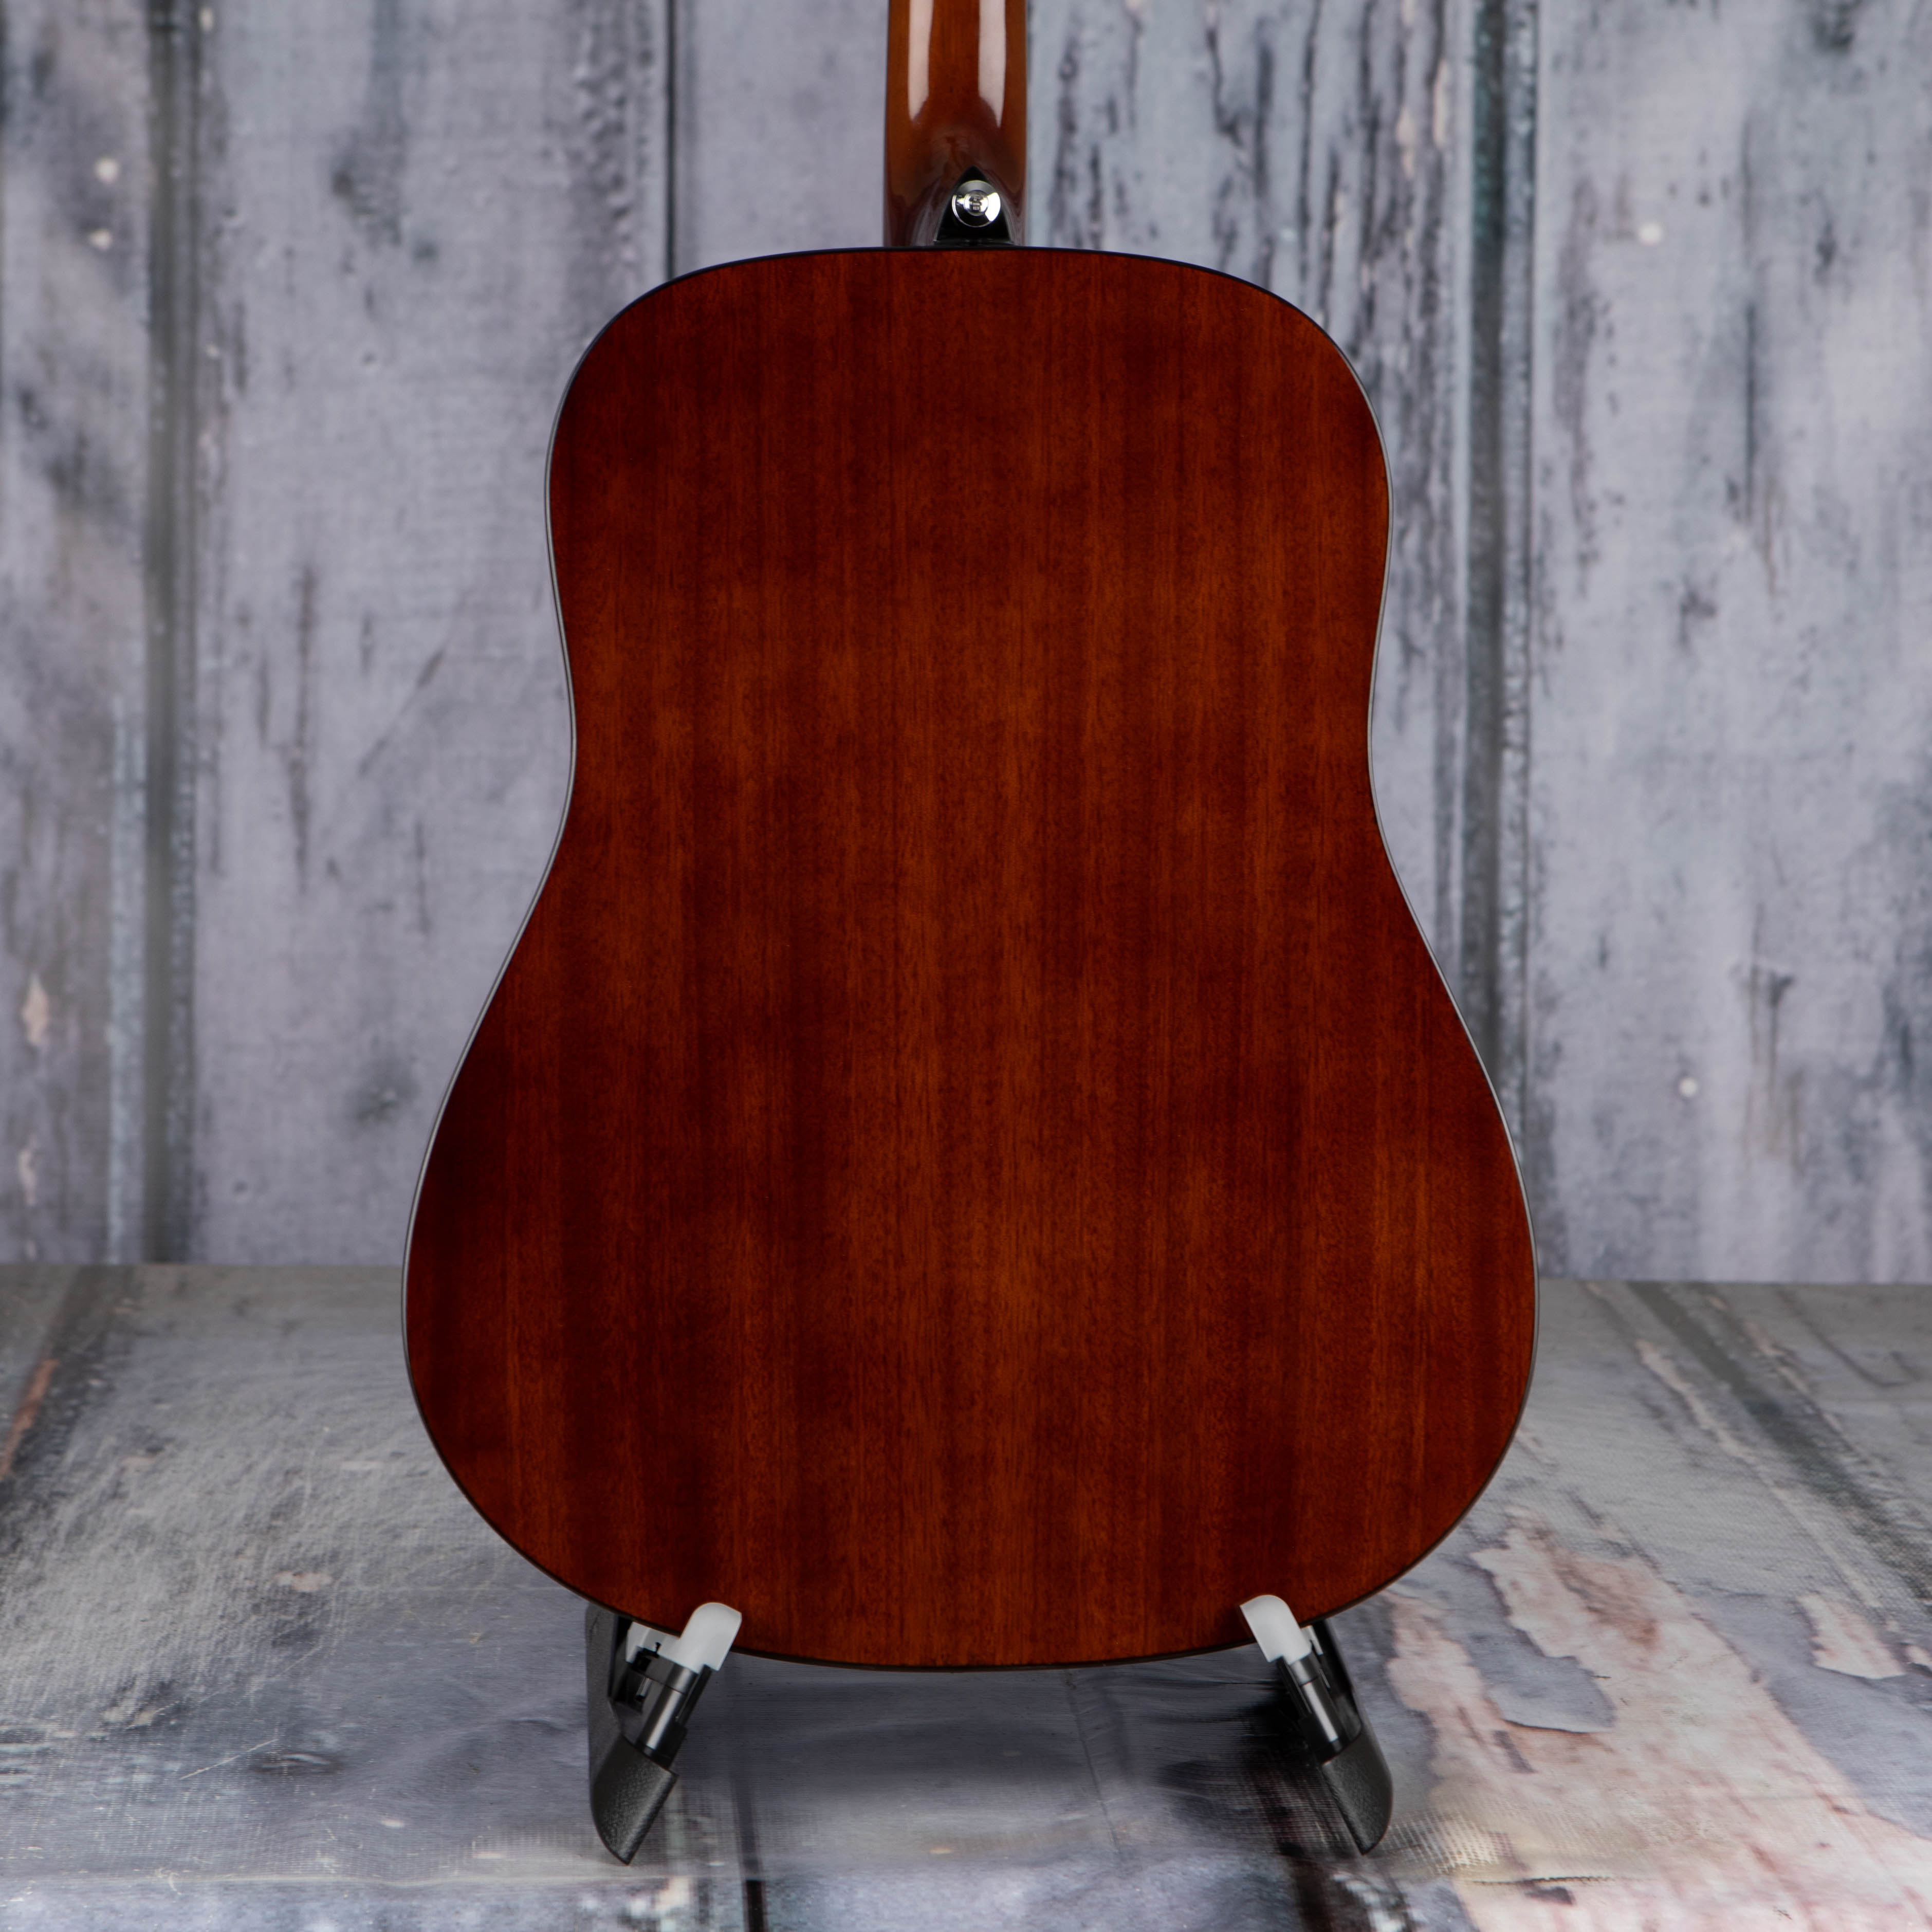 Ibanez IJV50 Dreadnought Jam Pack Acoustic Guitar, Natural High Gloss, back closeup